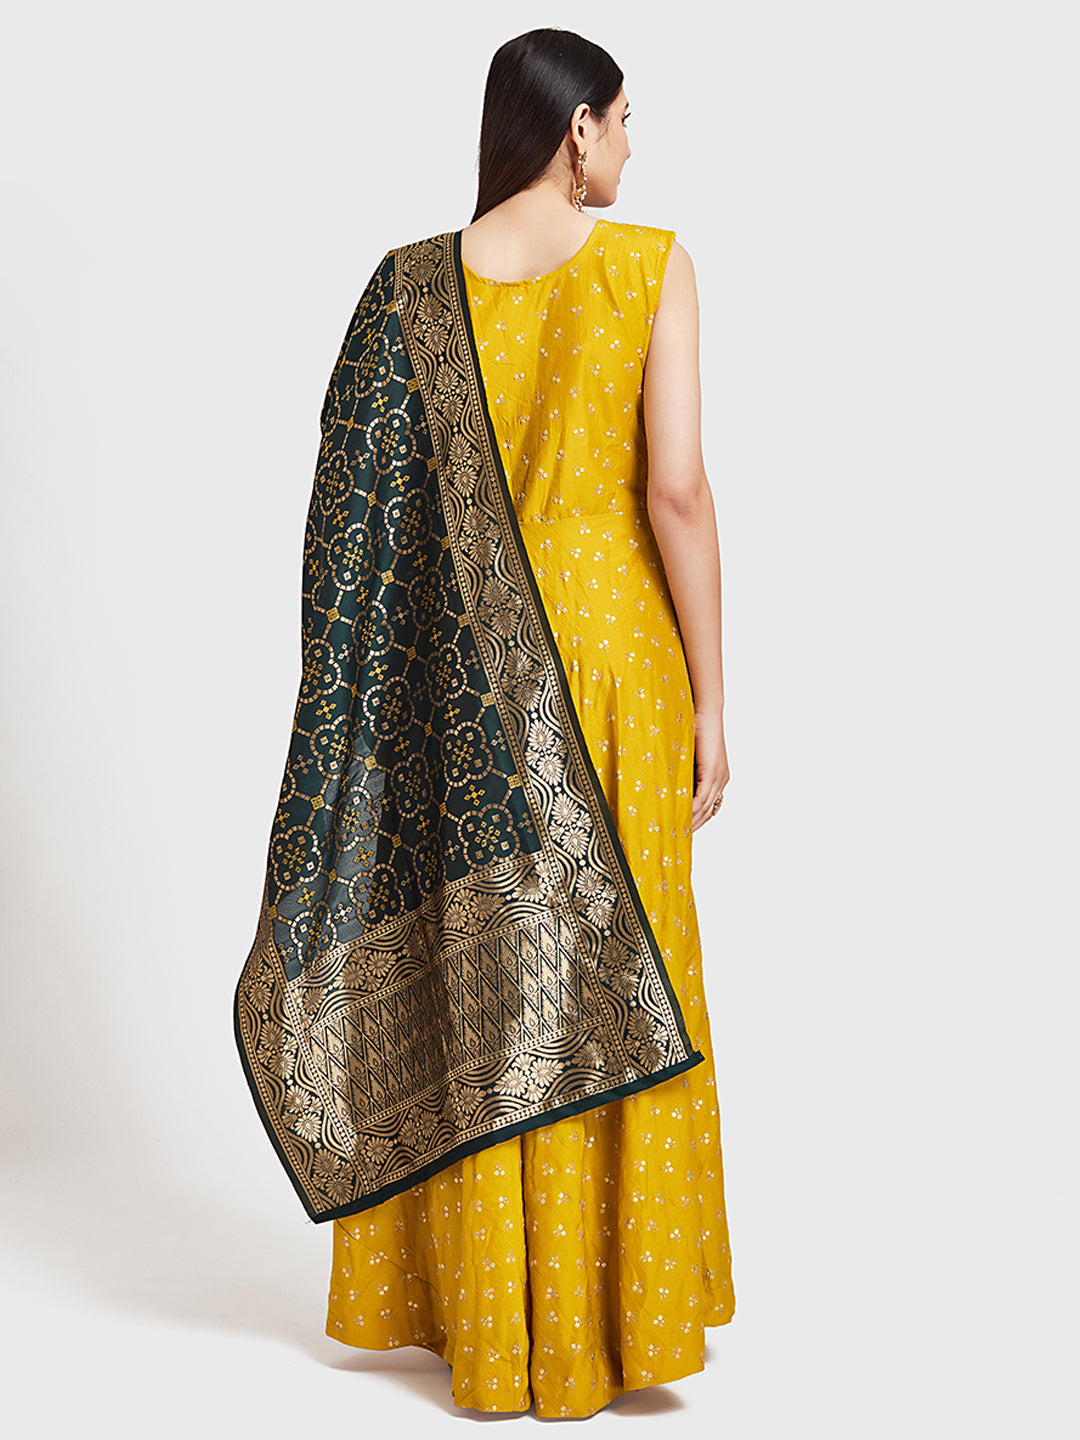 Neeru's Yellow & Green Embellished Anarkali Kurta With Dupatta